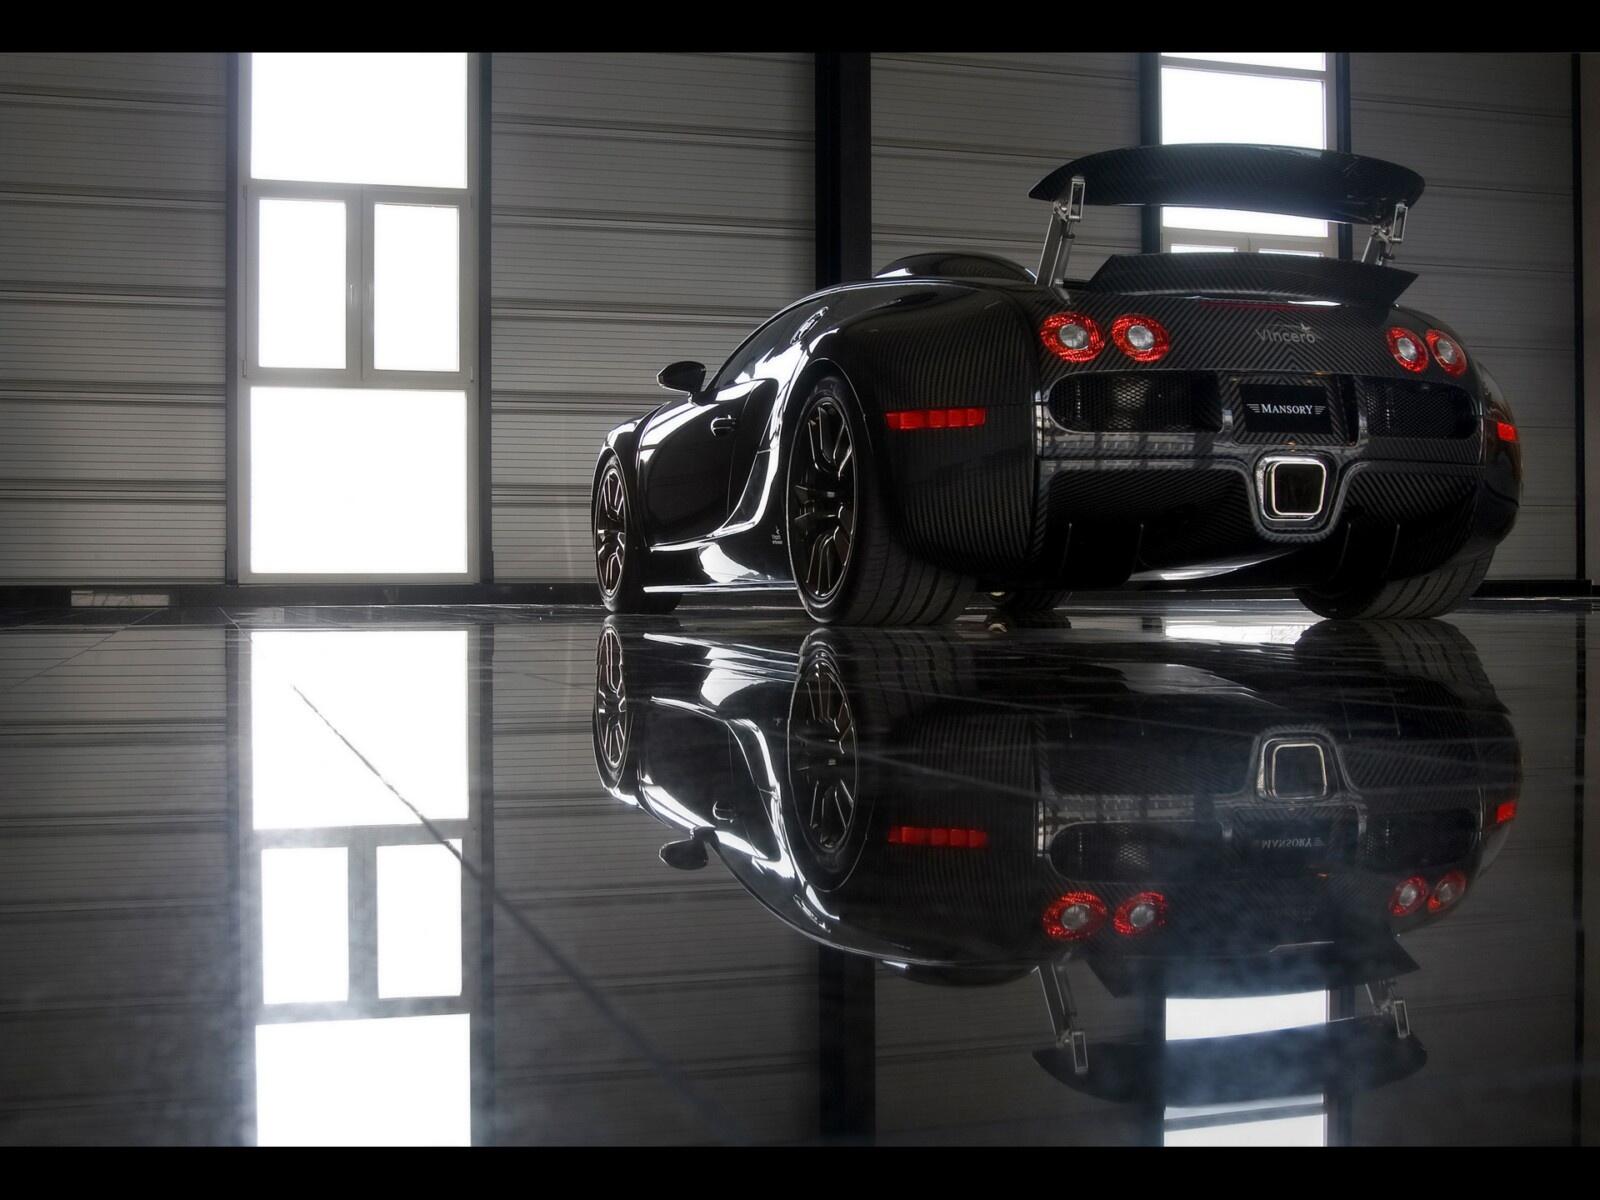 Free photo Black Bugatti standing in the hangar, rear view